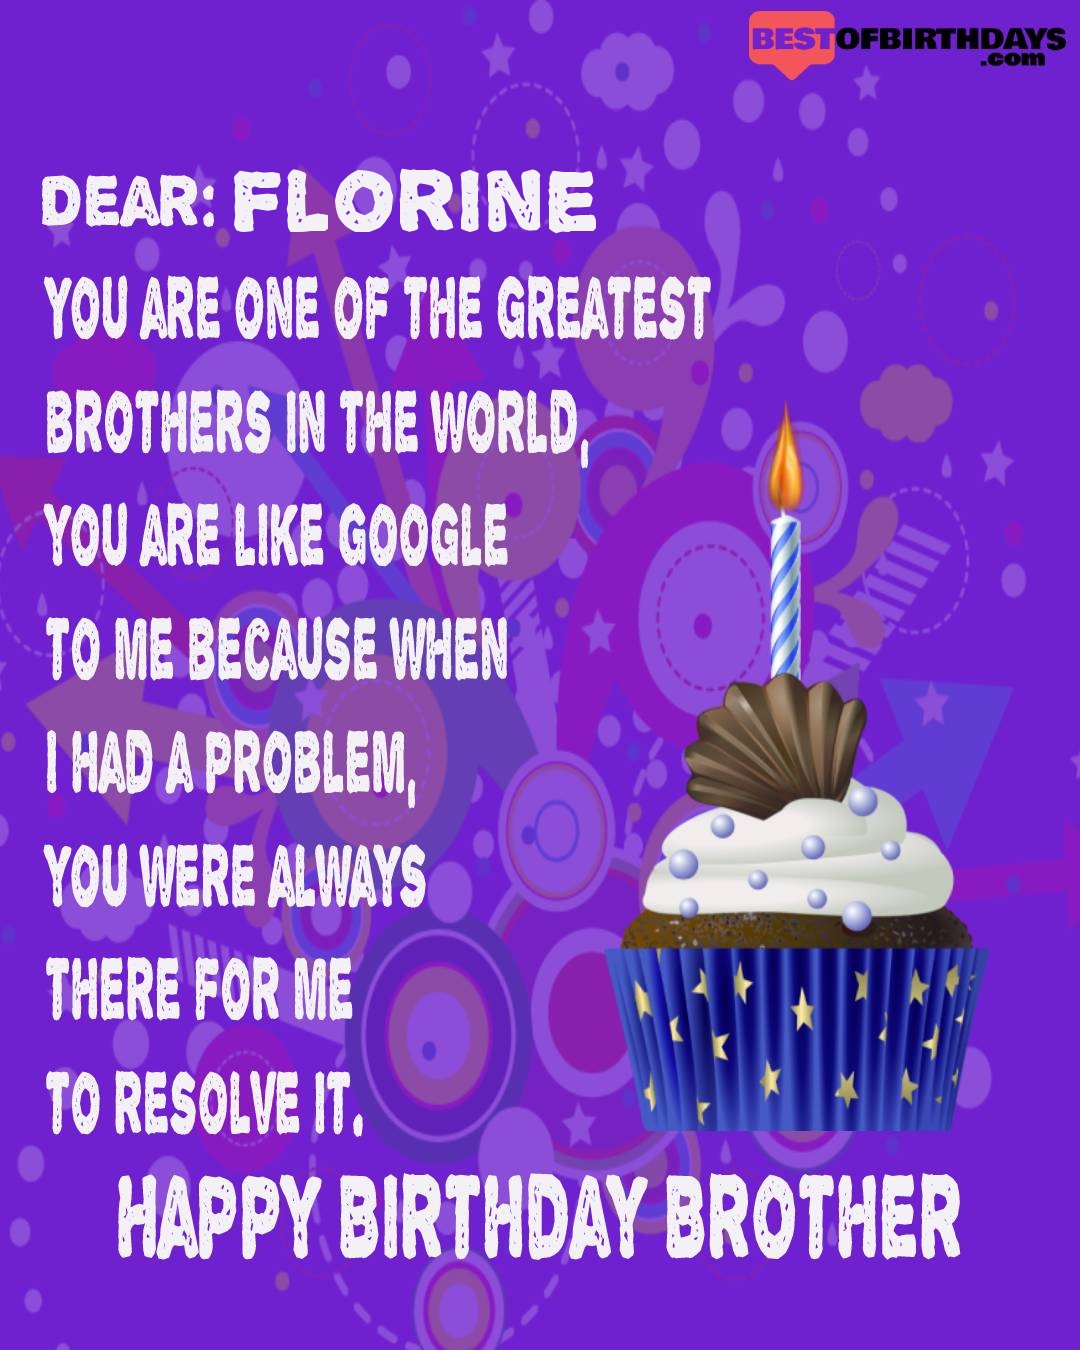 Happy birthday florine bhai brother bro